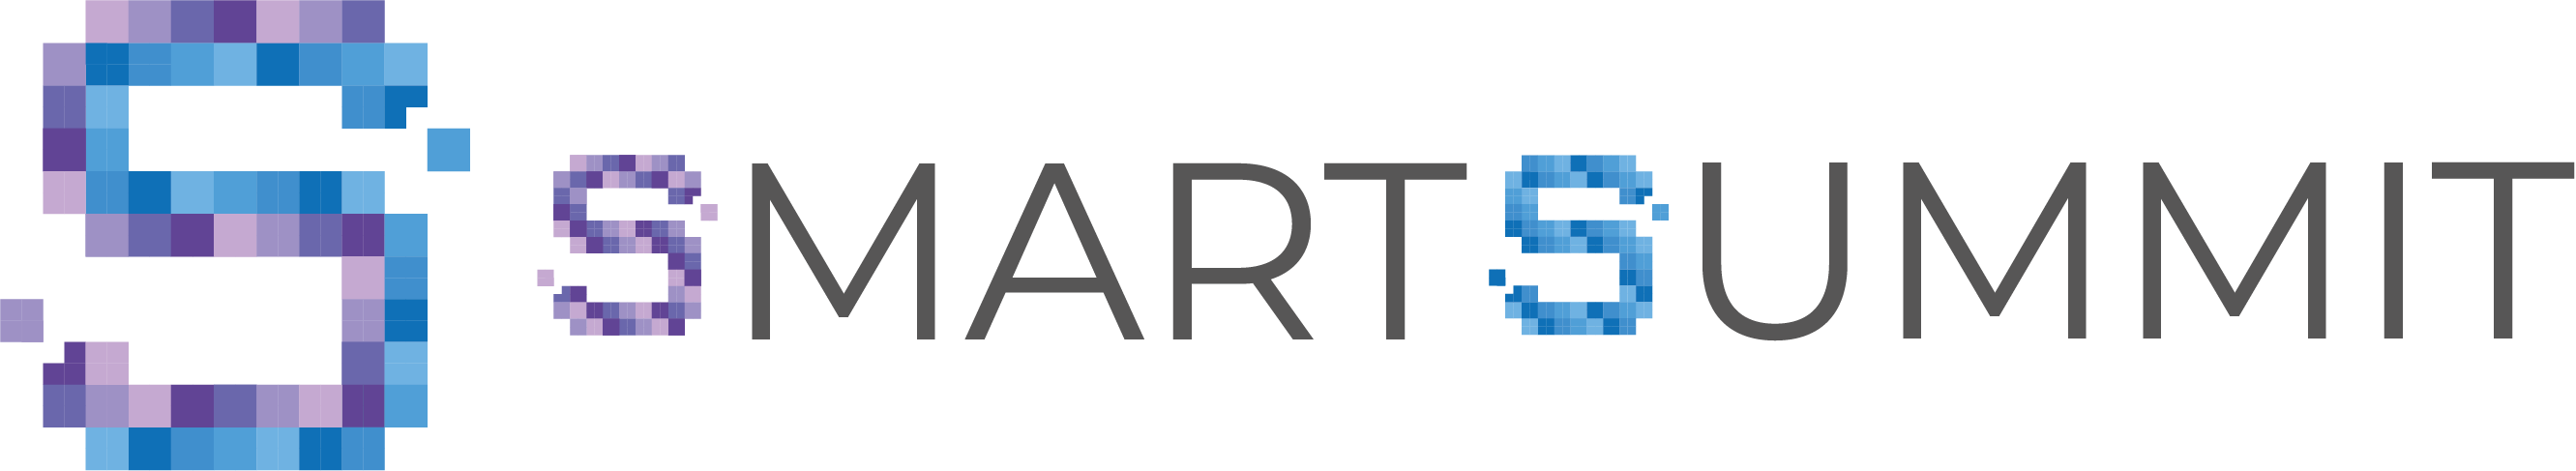 Smart Summit logo